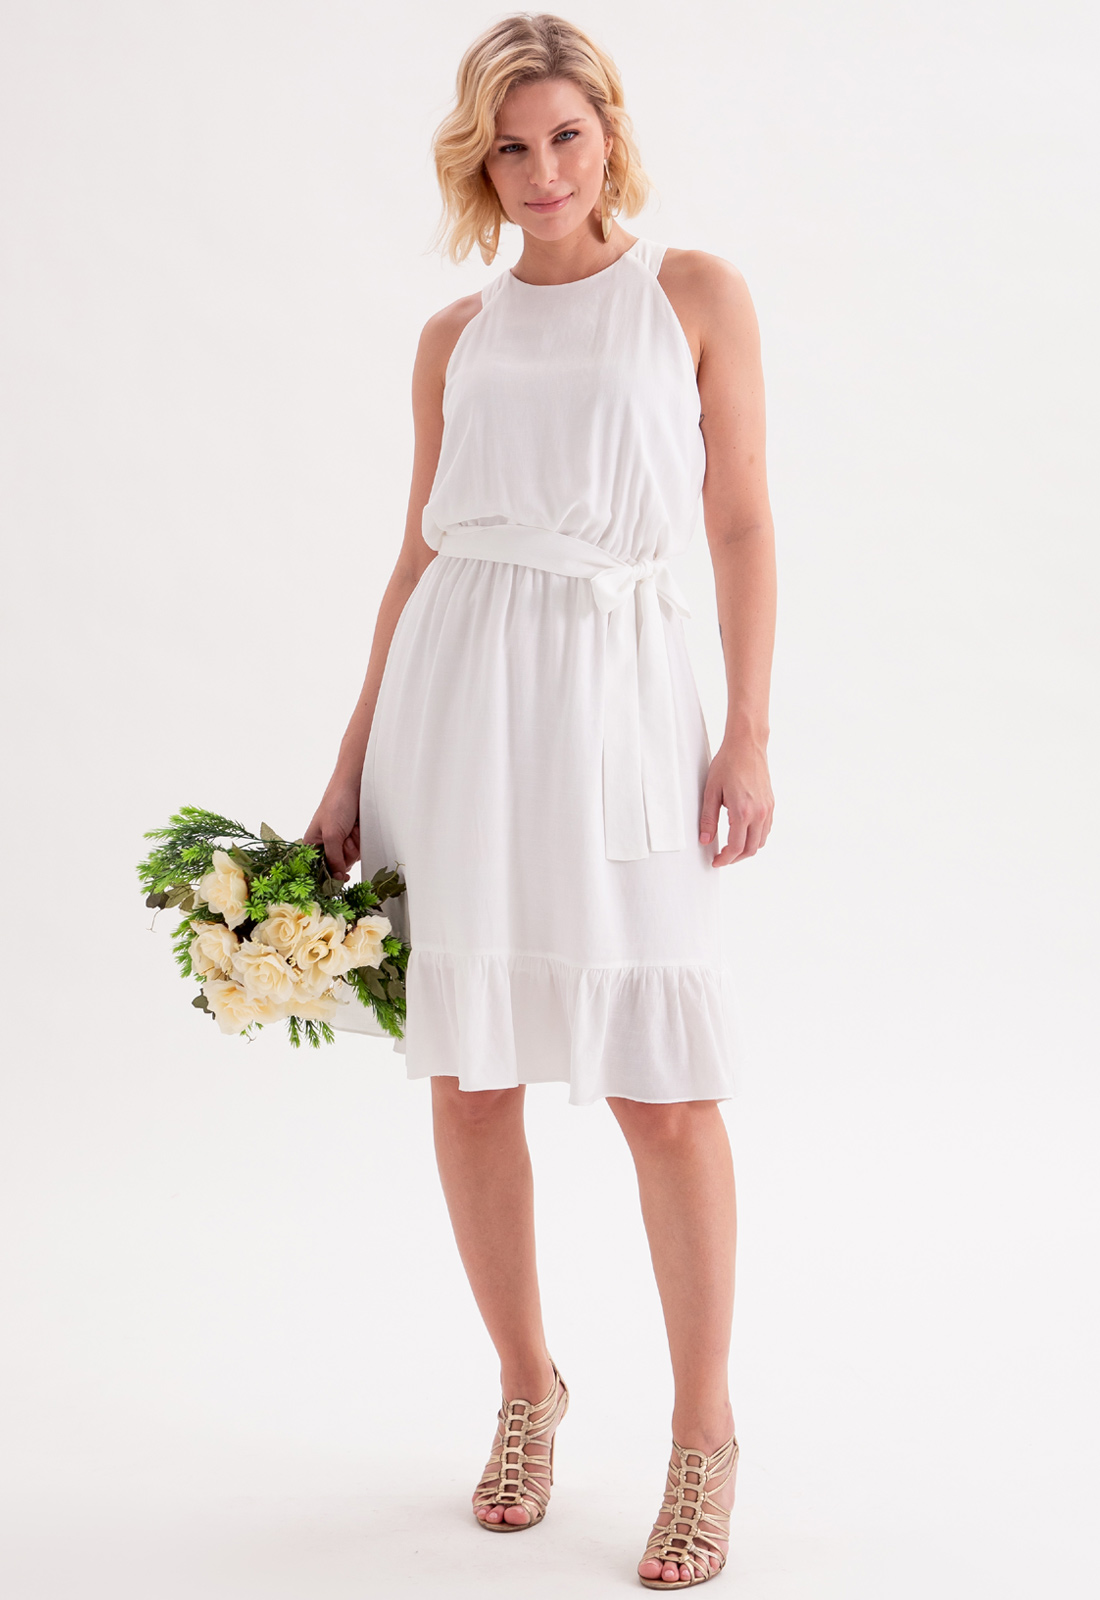 Vestido de festa curto branco - Ref. 2624